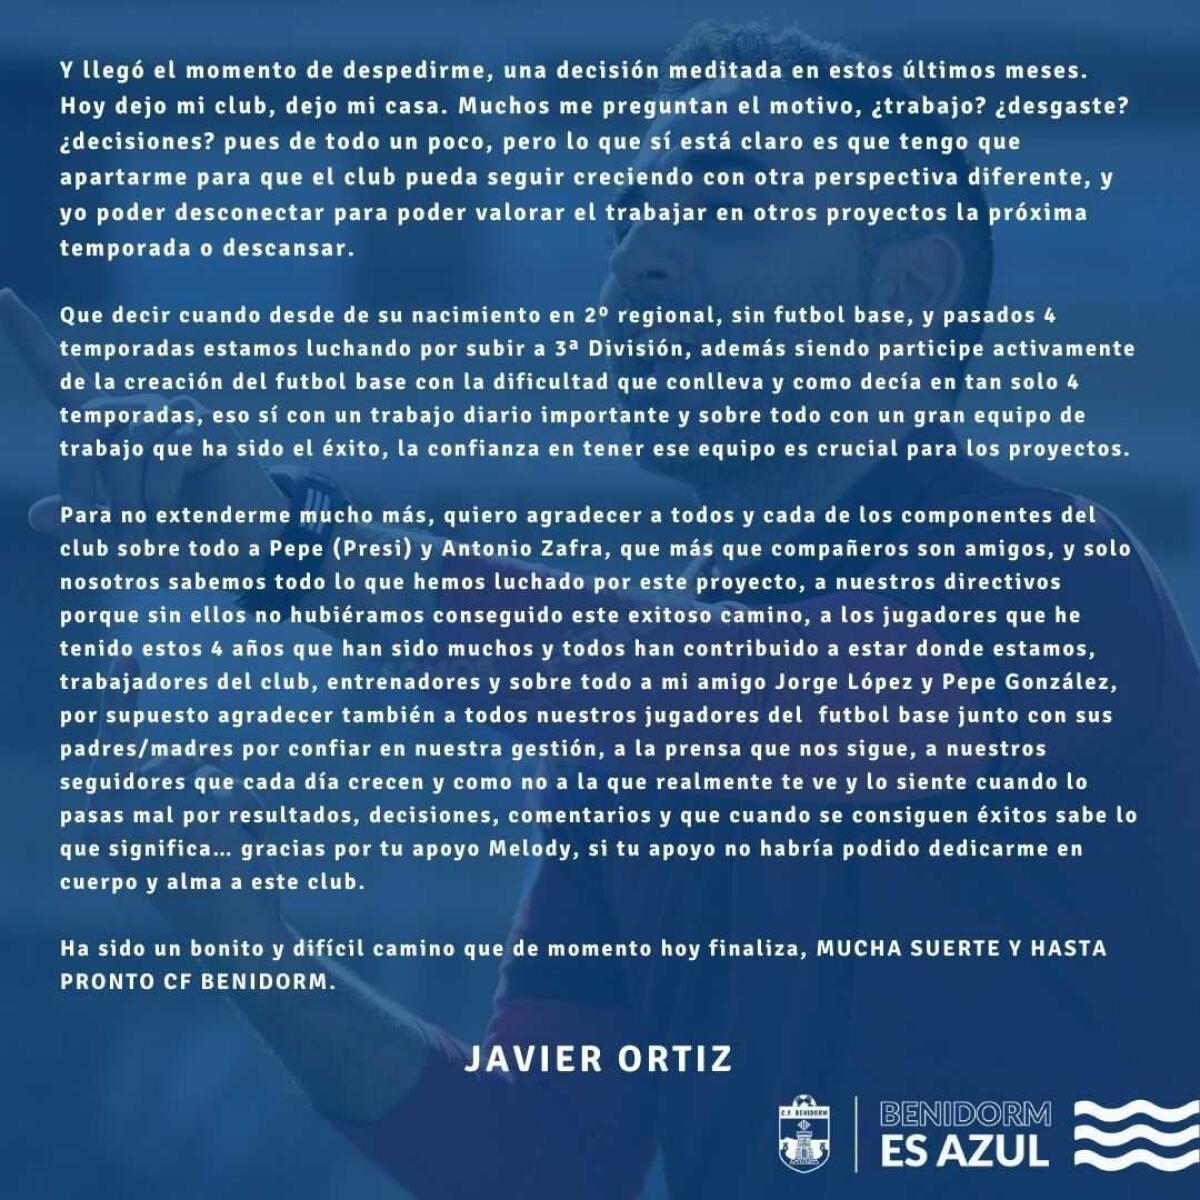 Javier Ortiz deja de ser el Director Deportivo del CF Benidorm